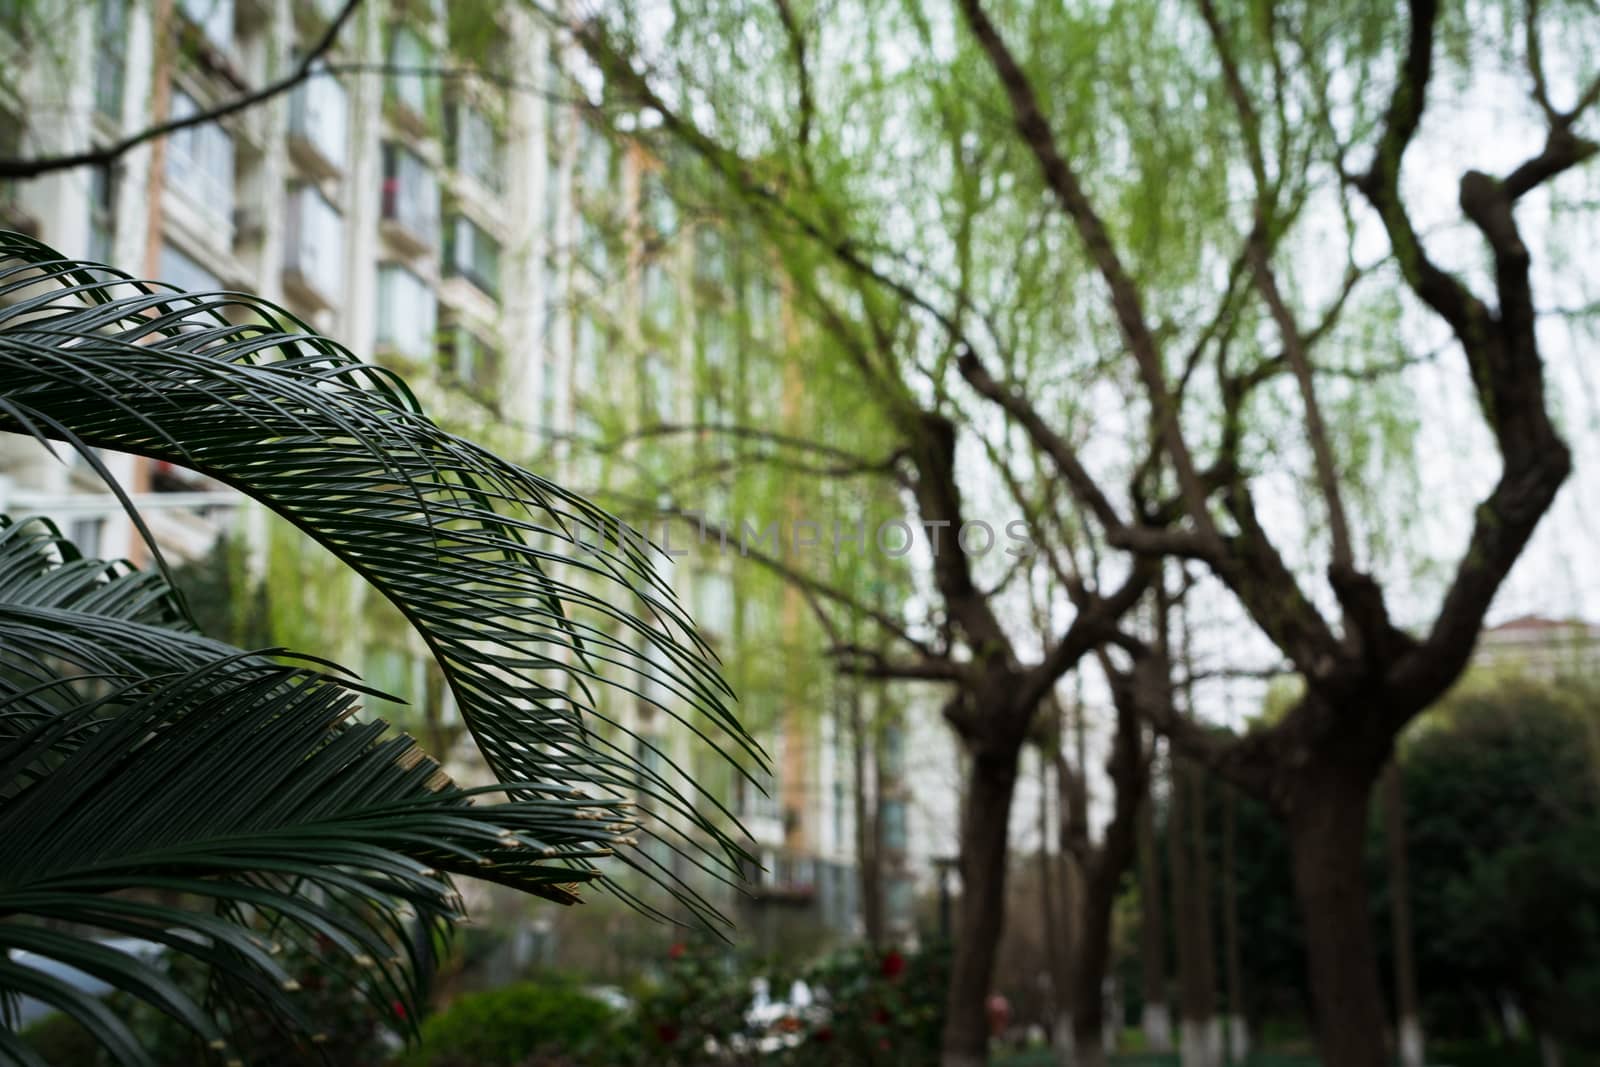 Plam leave in garden - blurred building background